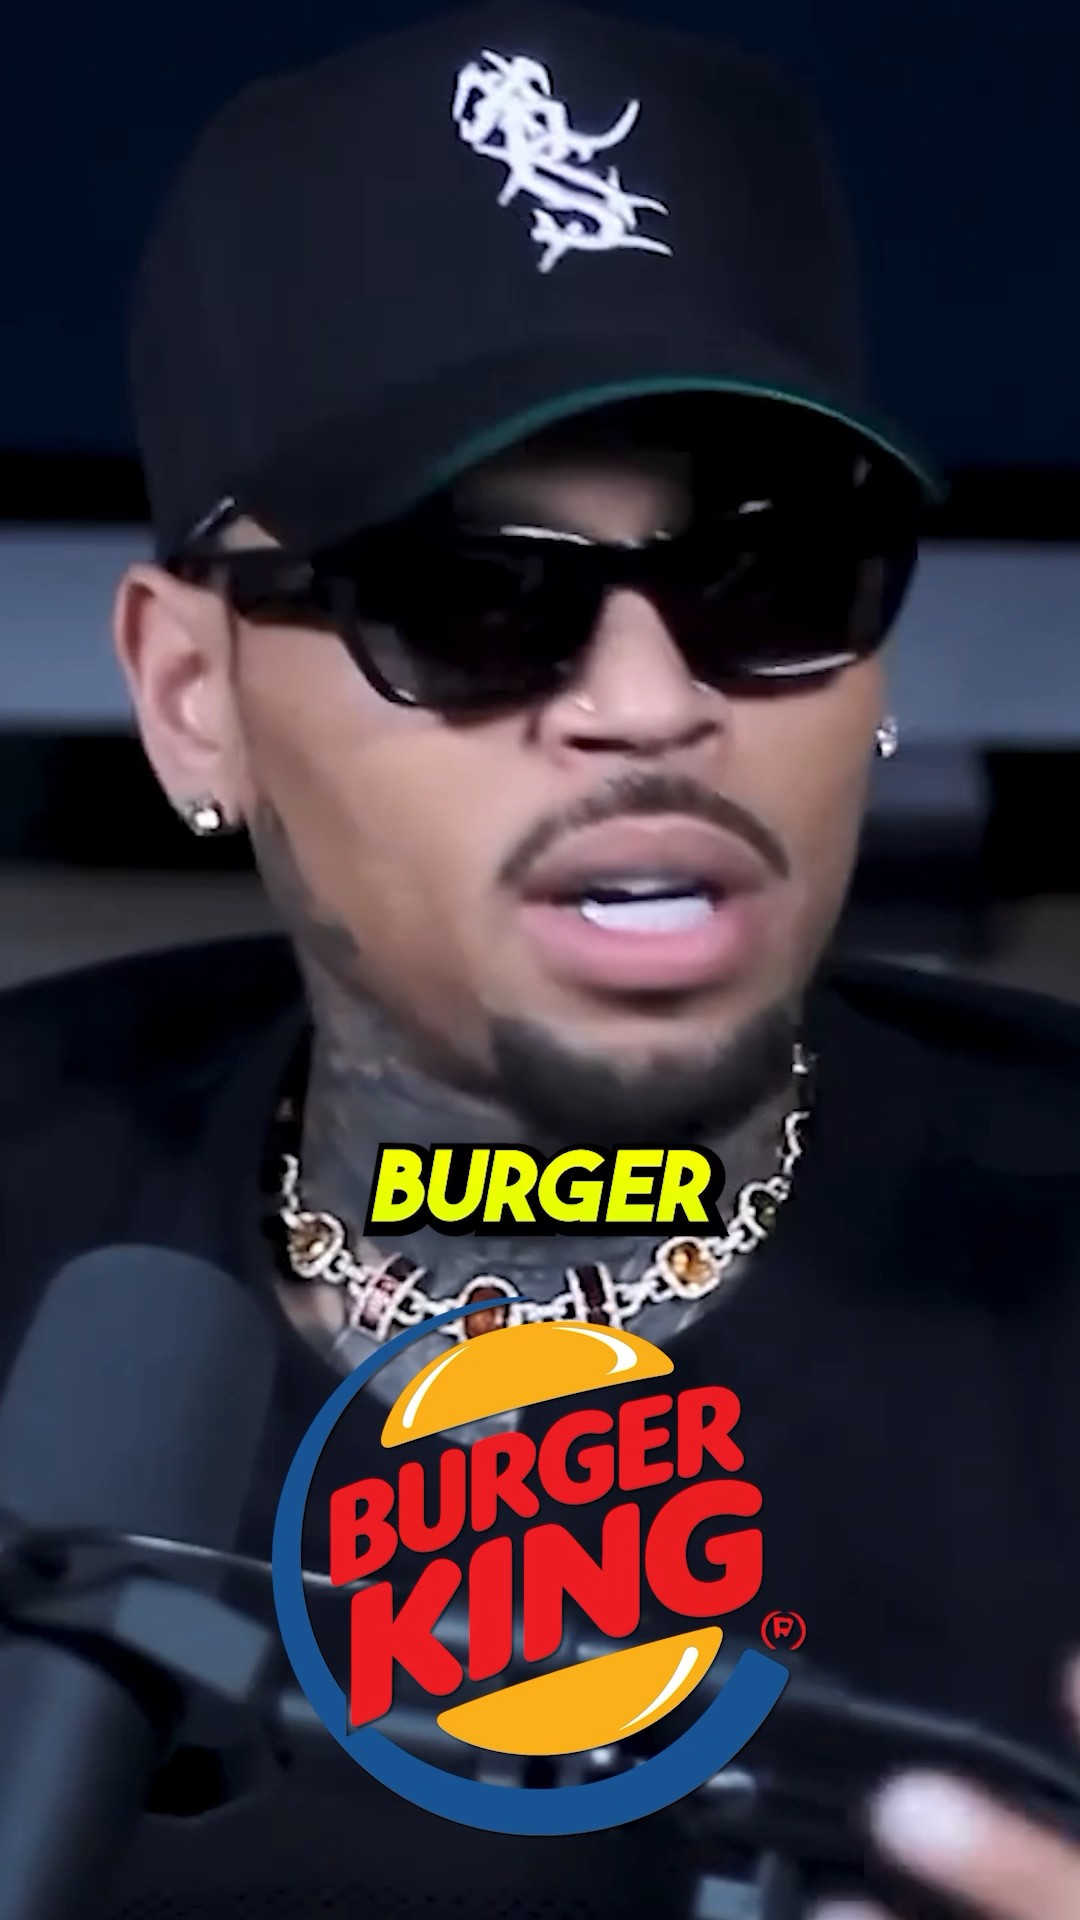 Chris Brown OWNS a BURGER KING restaurant